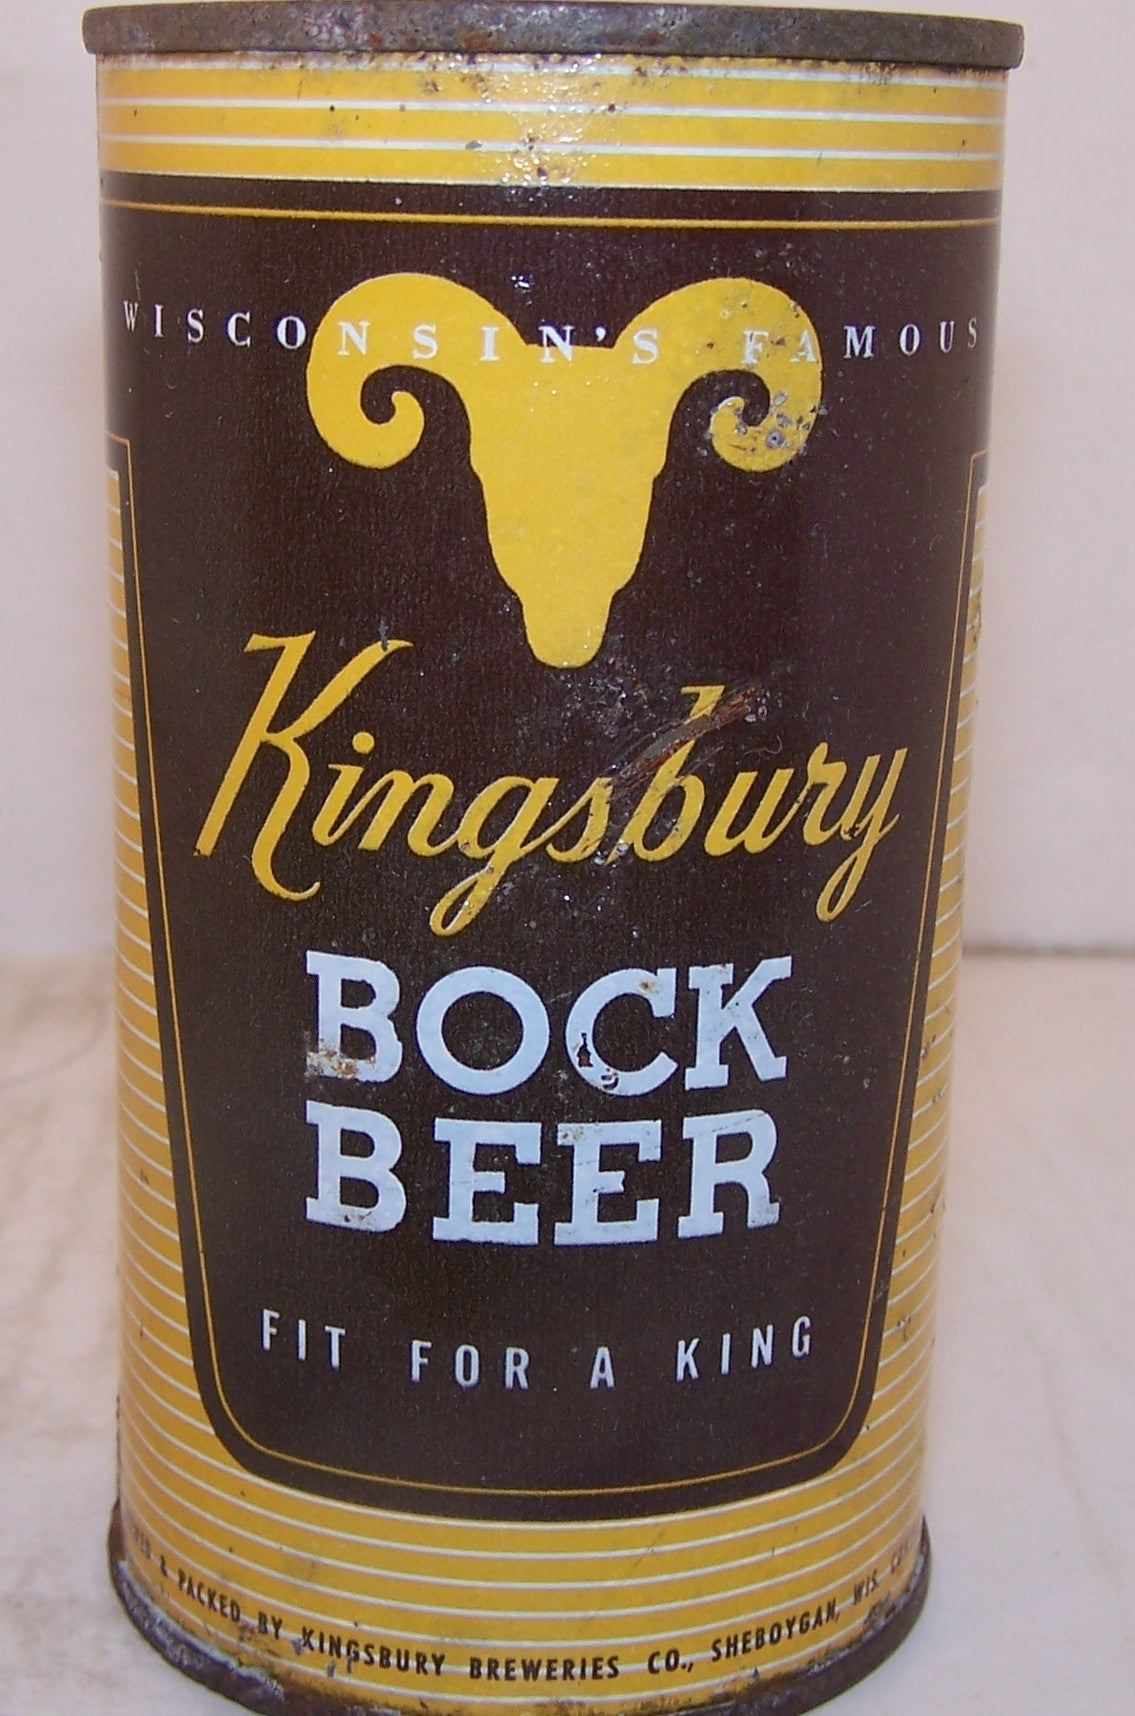 Kingsbury Bock Beer, USBC 88-14, Grade 1-/2+ Sold on 3/2/15